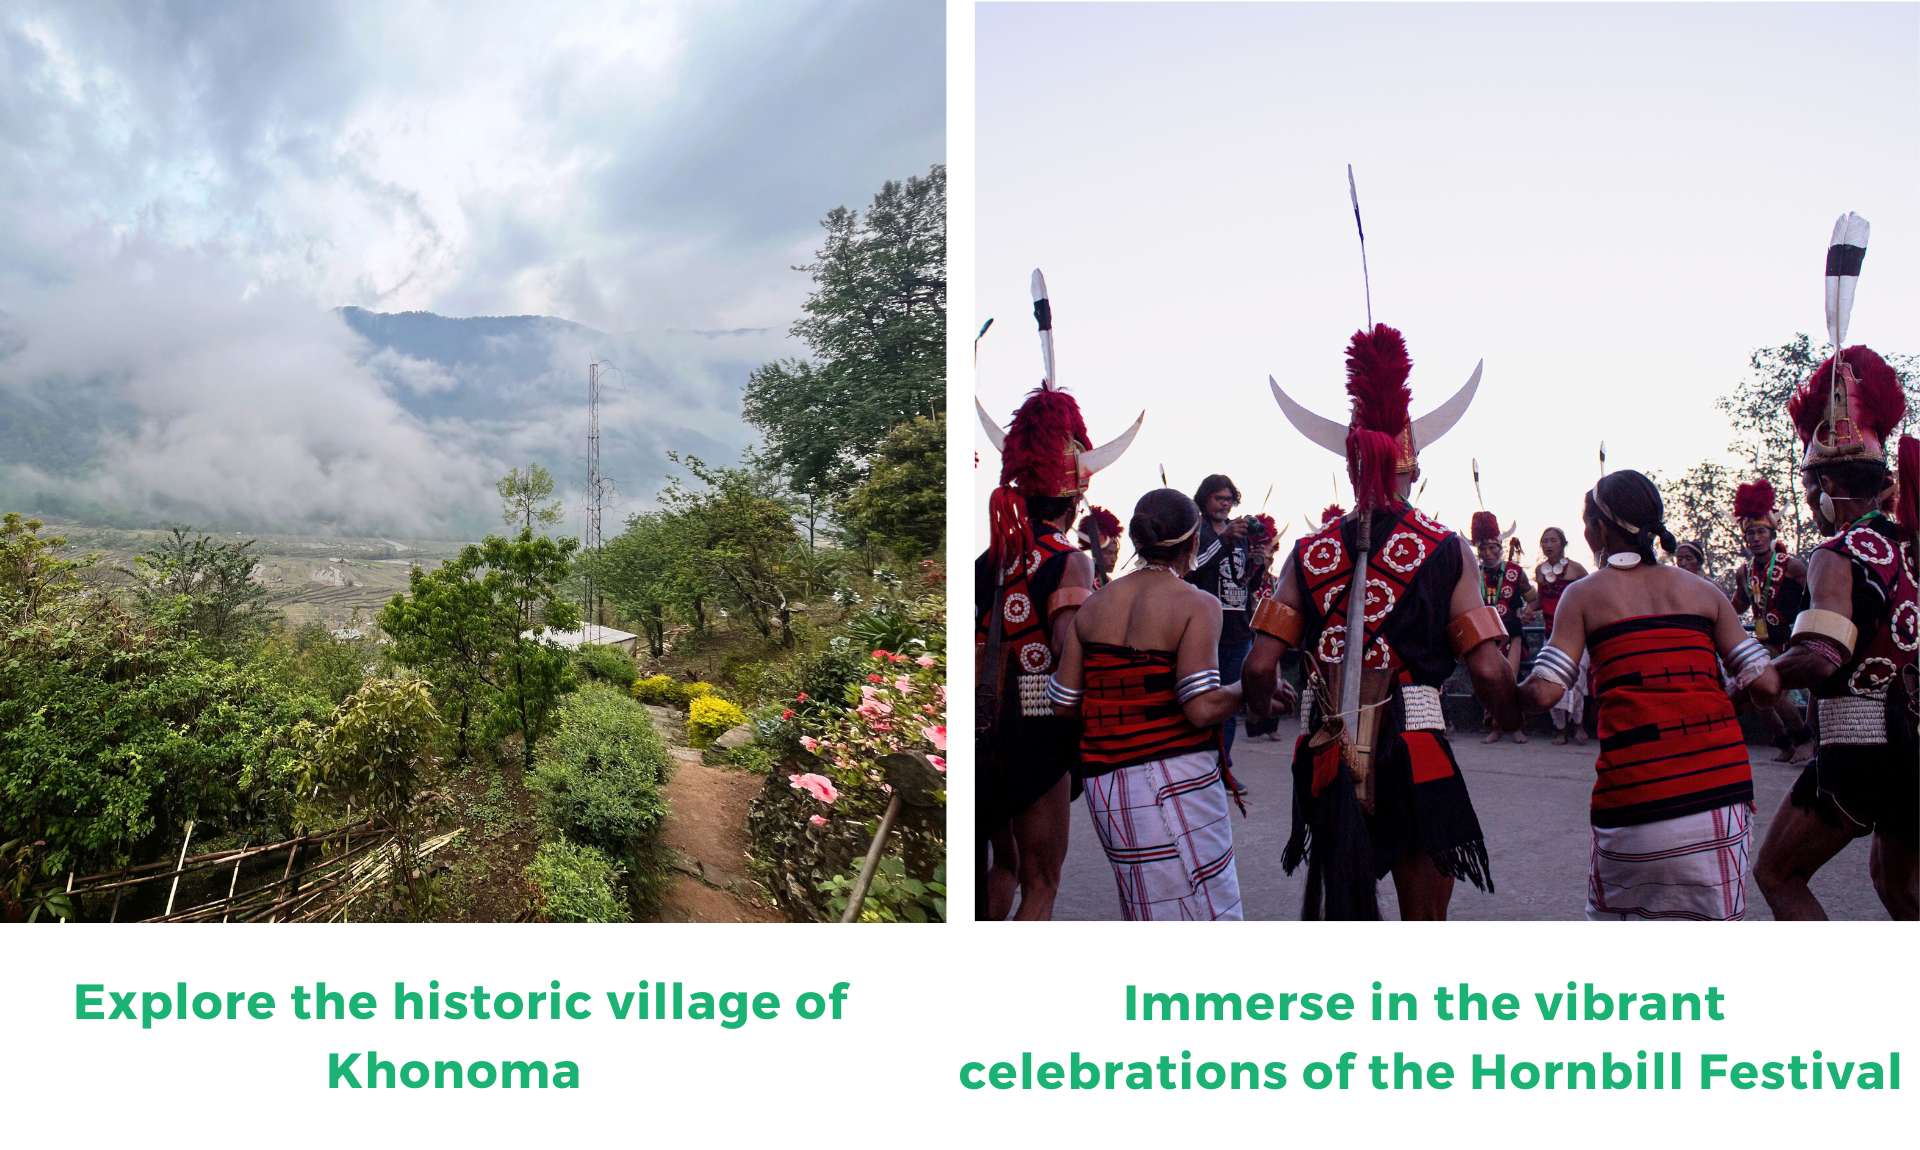 Immerse in the vibrant celebrations of the Hornbill Festival